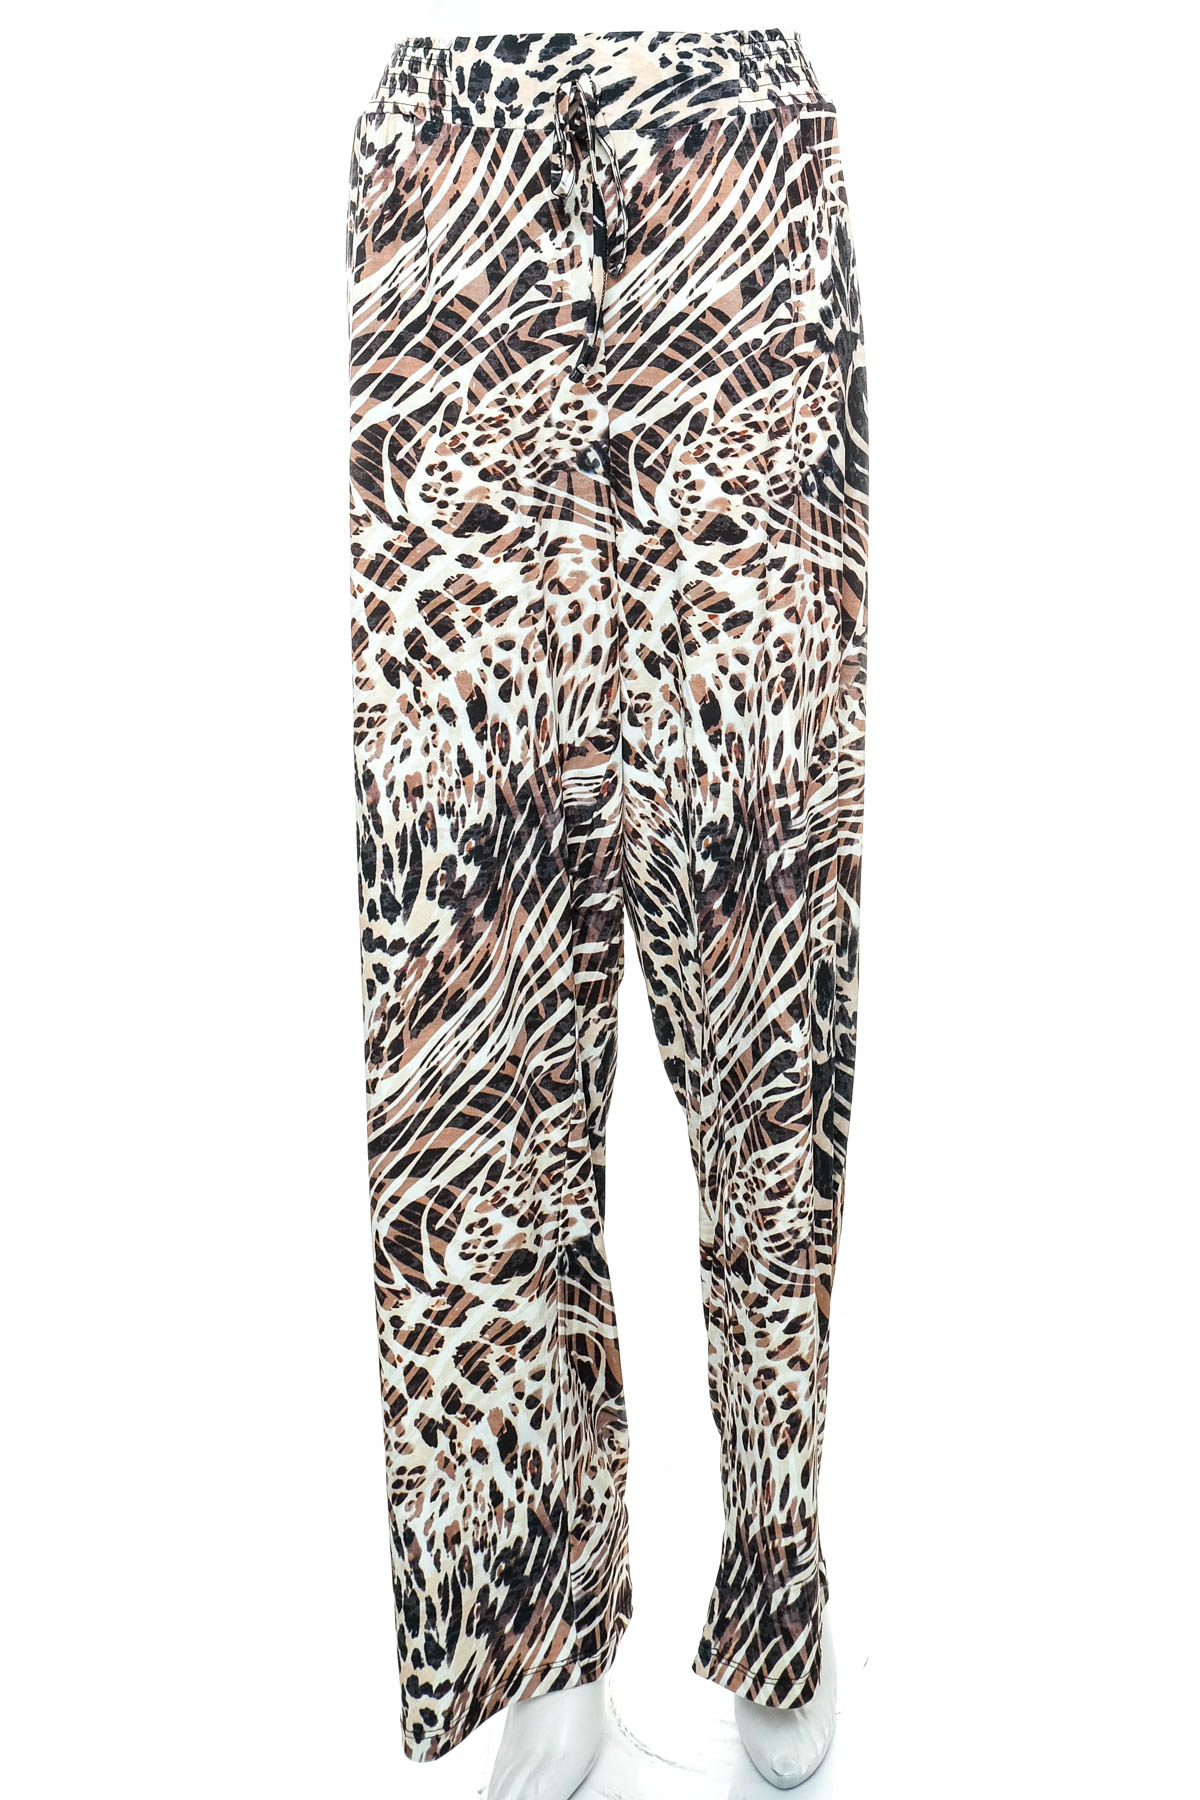 Women's trousers - Bpc selection bonprix collection - 0